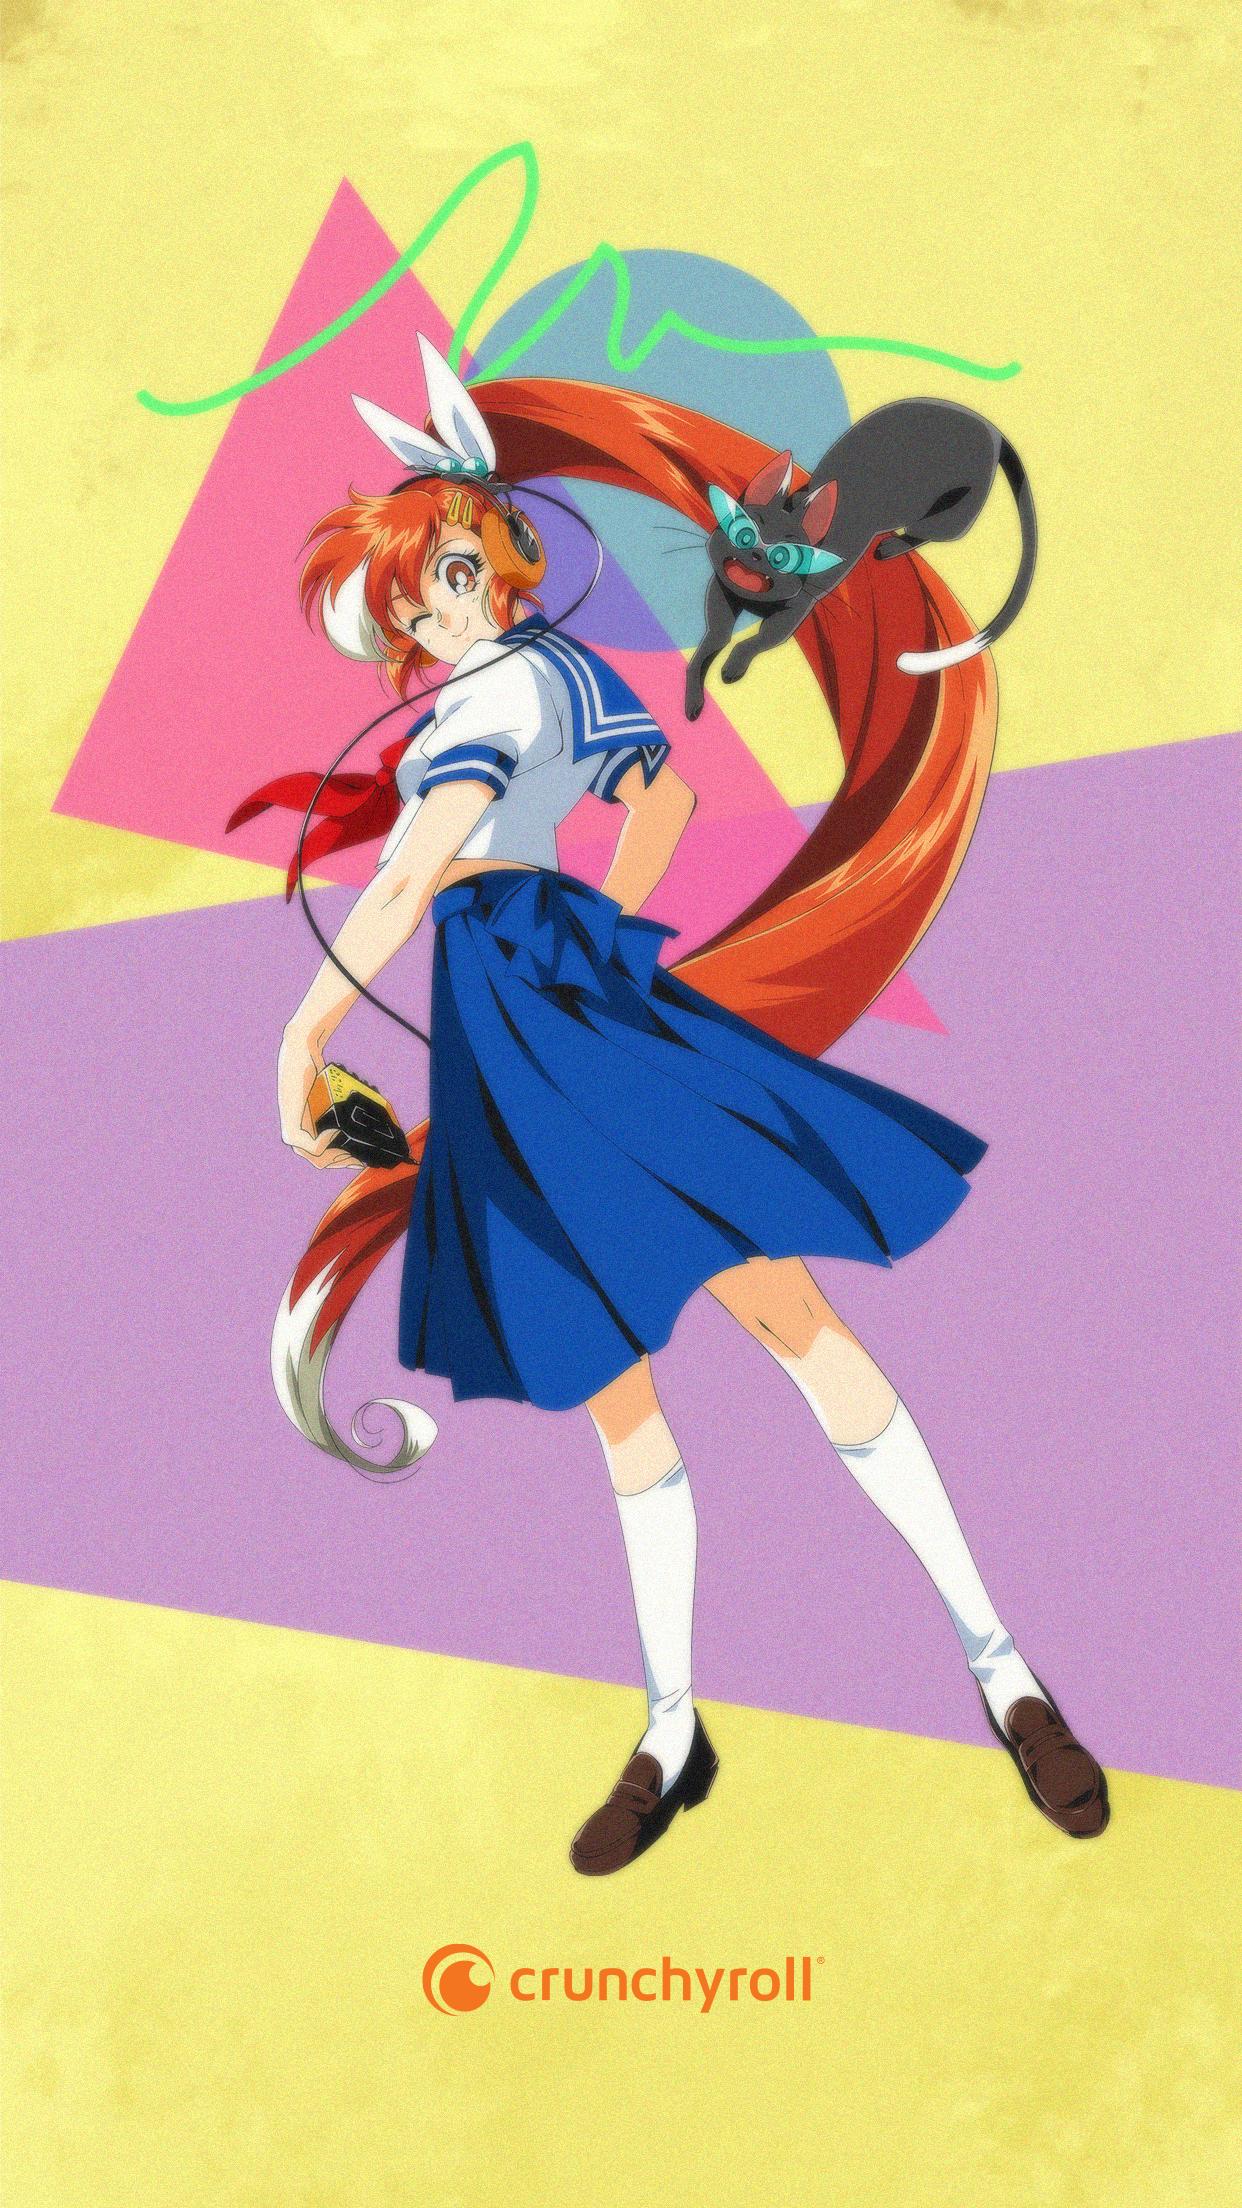 Anime wallpaper (mobile) by Jiolns on DeviantArt